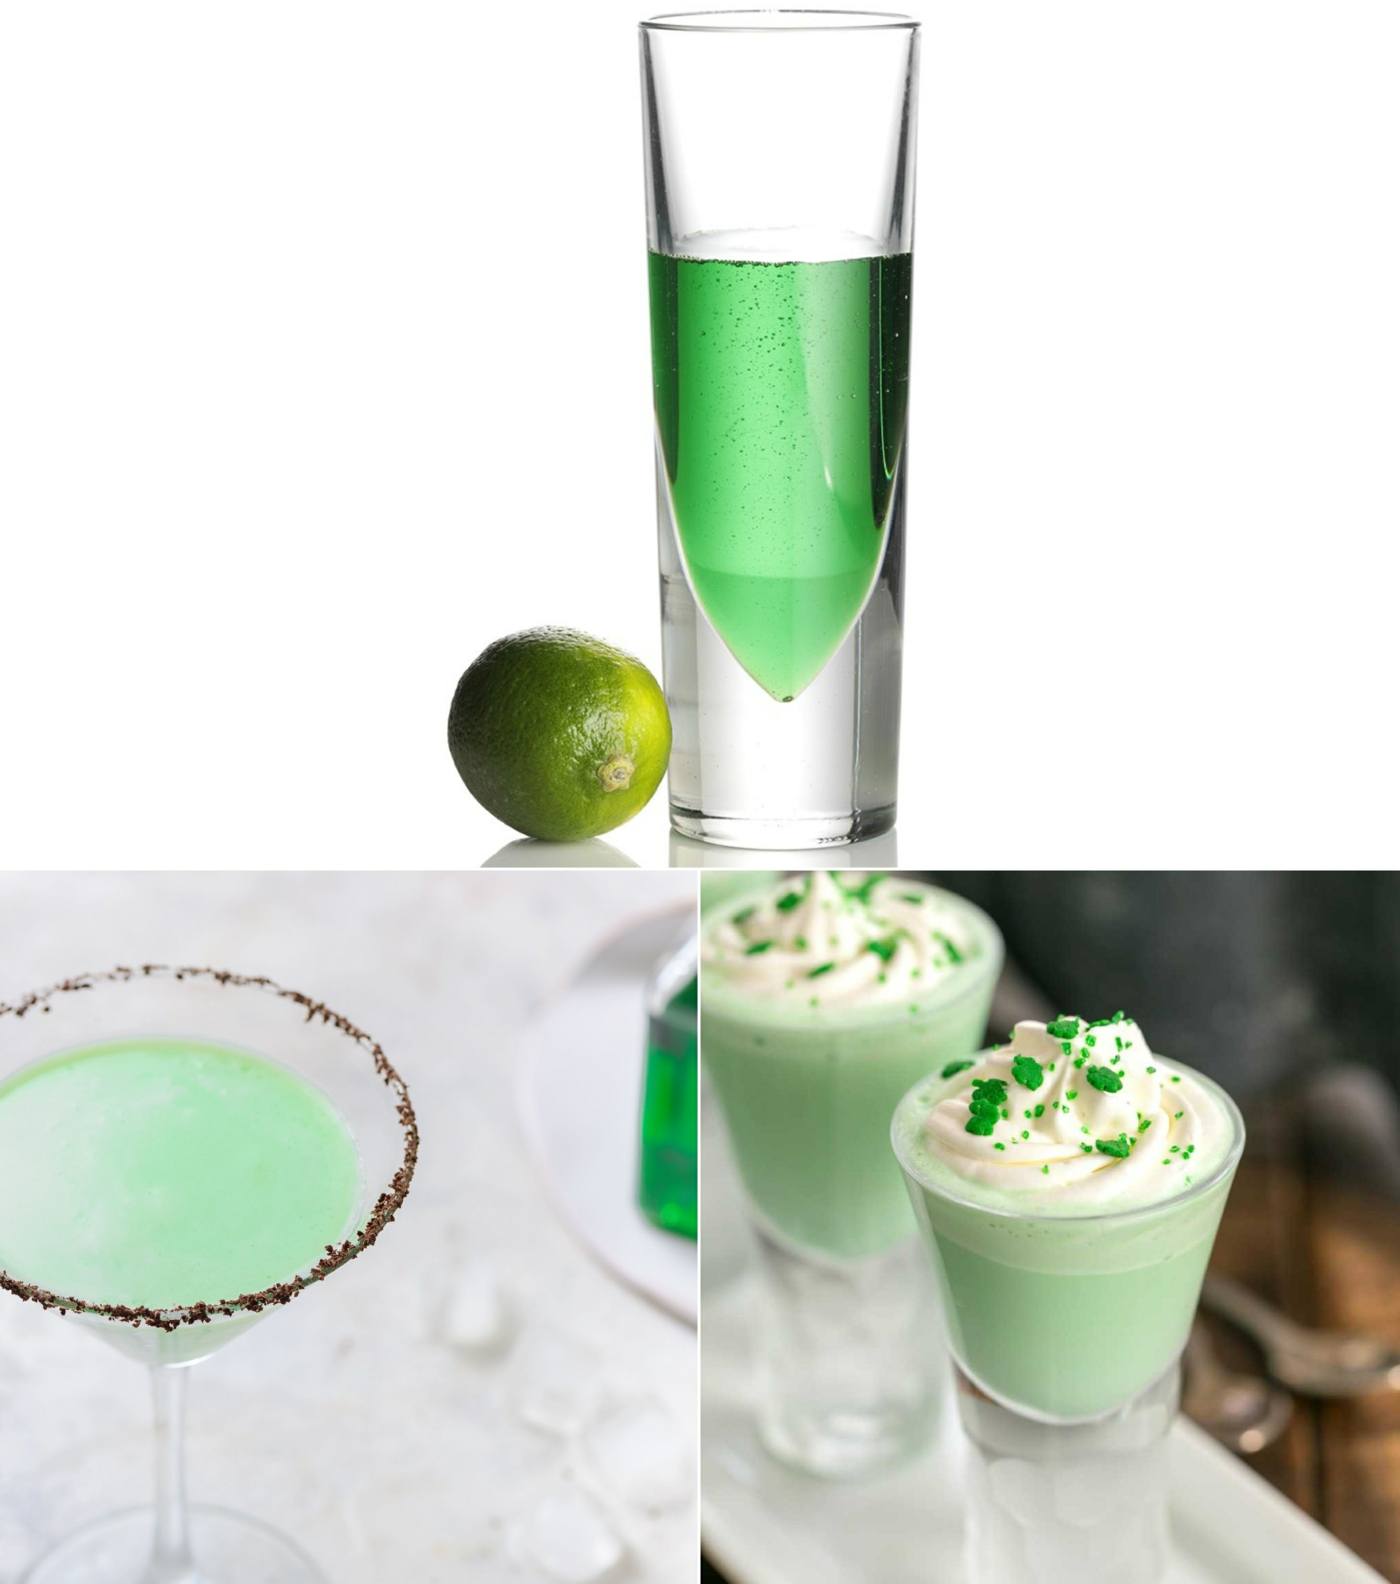 Shots Rezepte in grüner Farbe - Grashüpfer mit Kakaolikör, Minzlikör